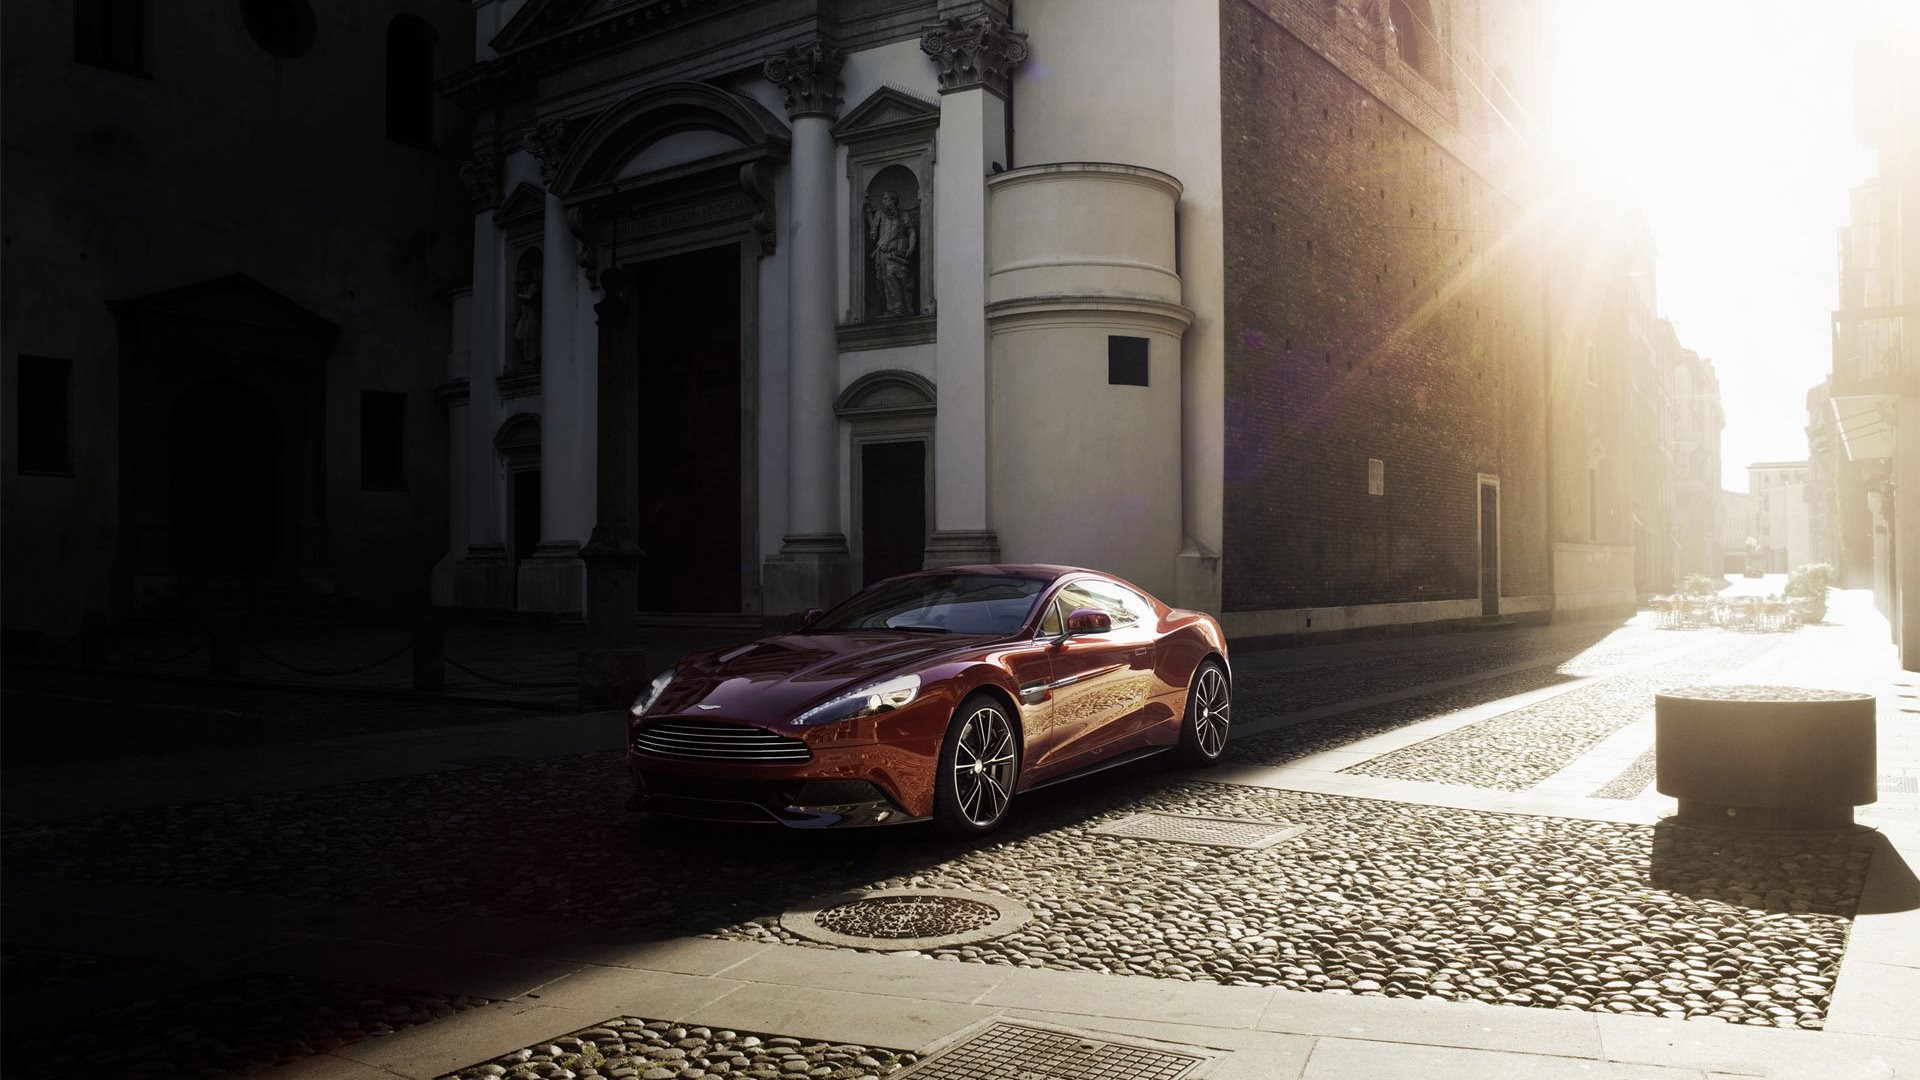 The Aston Martin Vanquish drives down a sunny street.